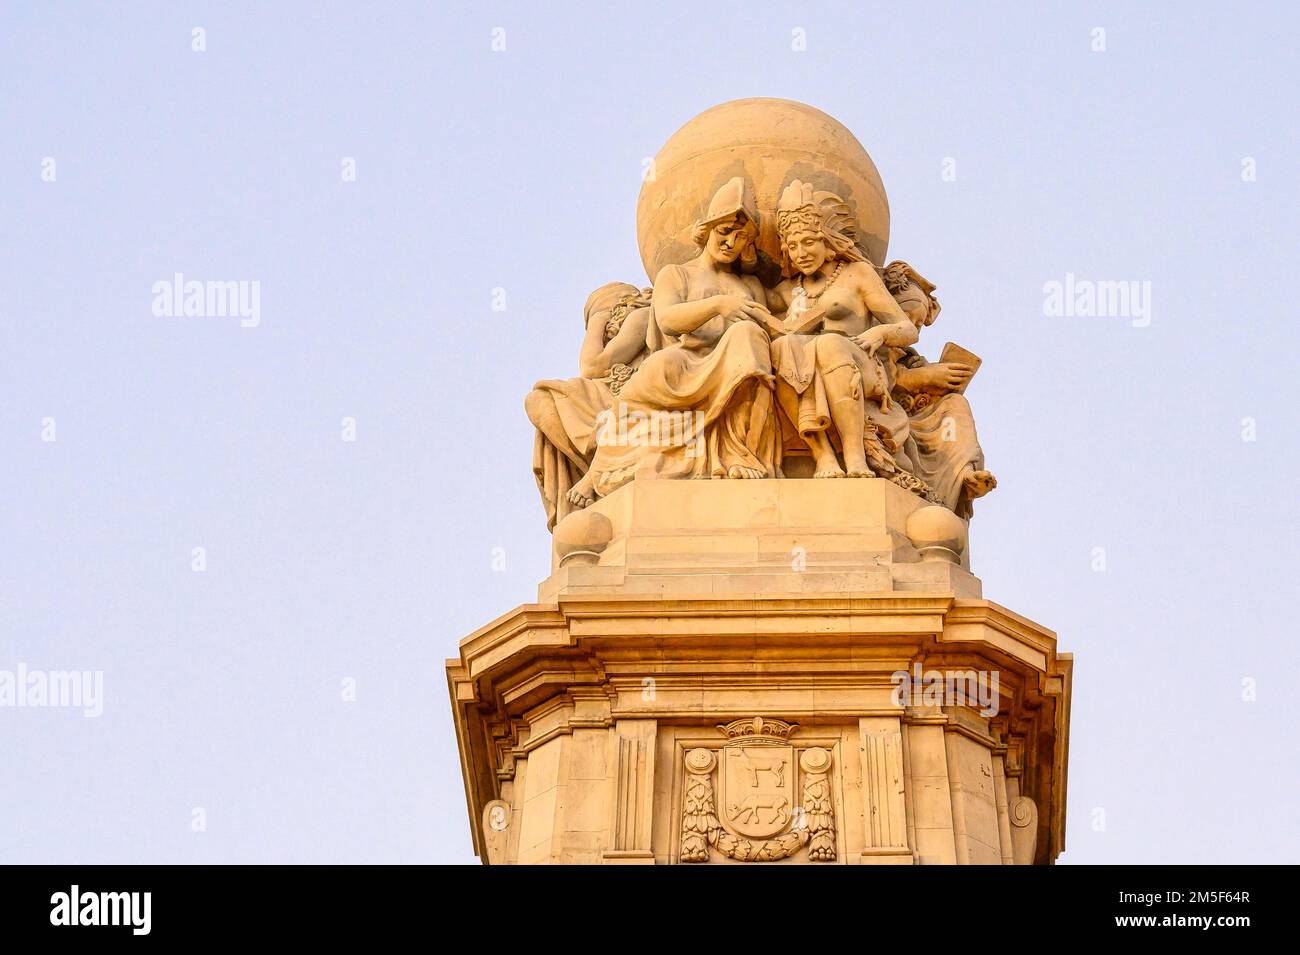 Monument to Miguel de Cervantes Saavedra. Stone sculpture on top of the famous sculpture. Stock Photo